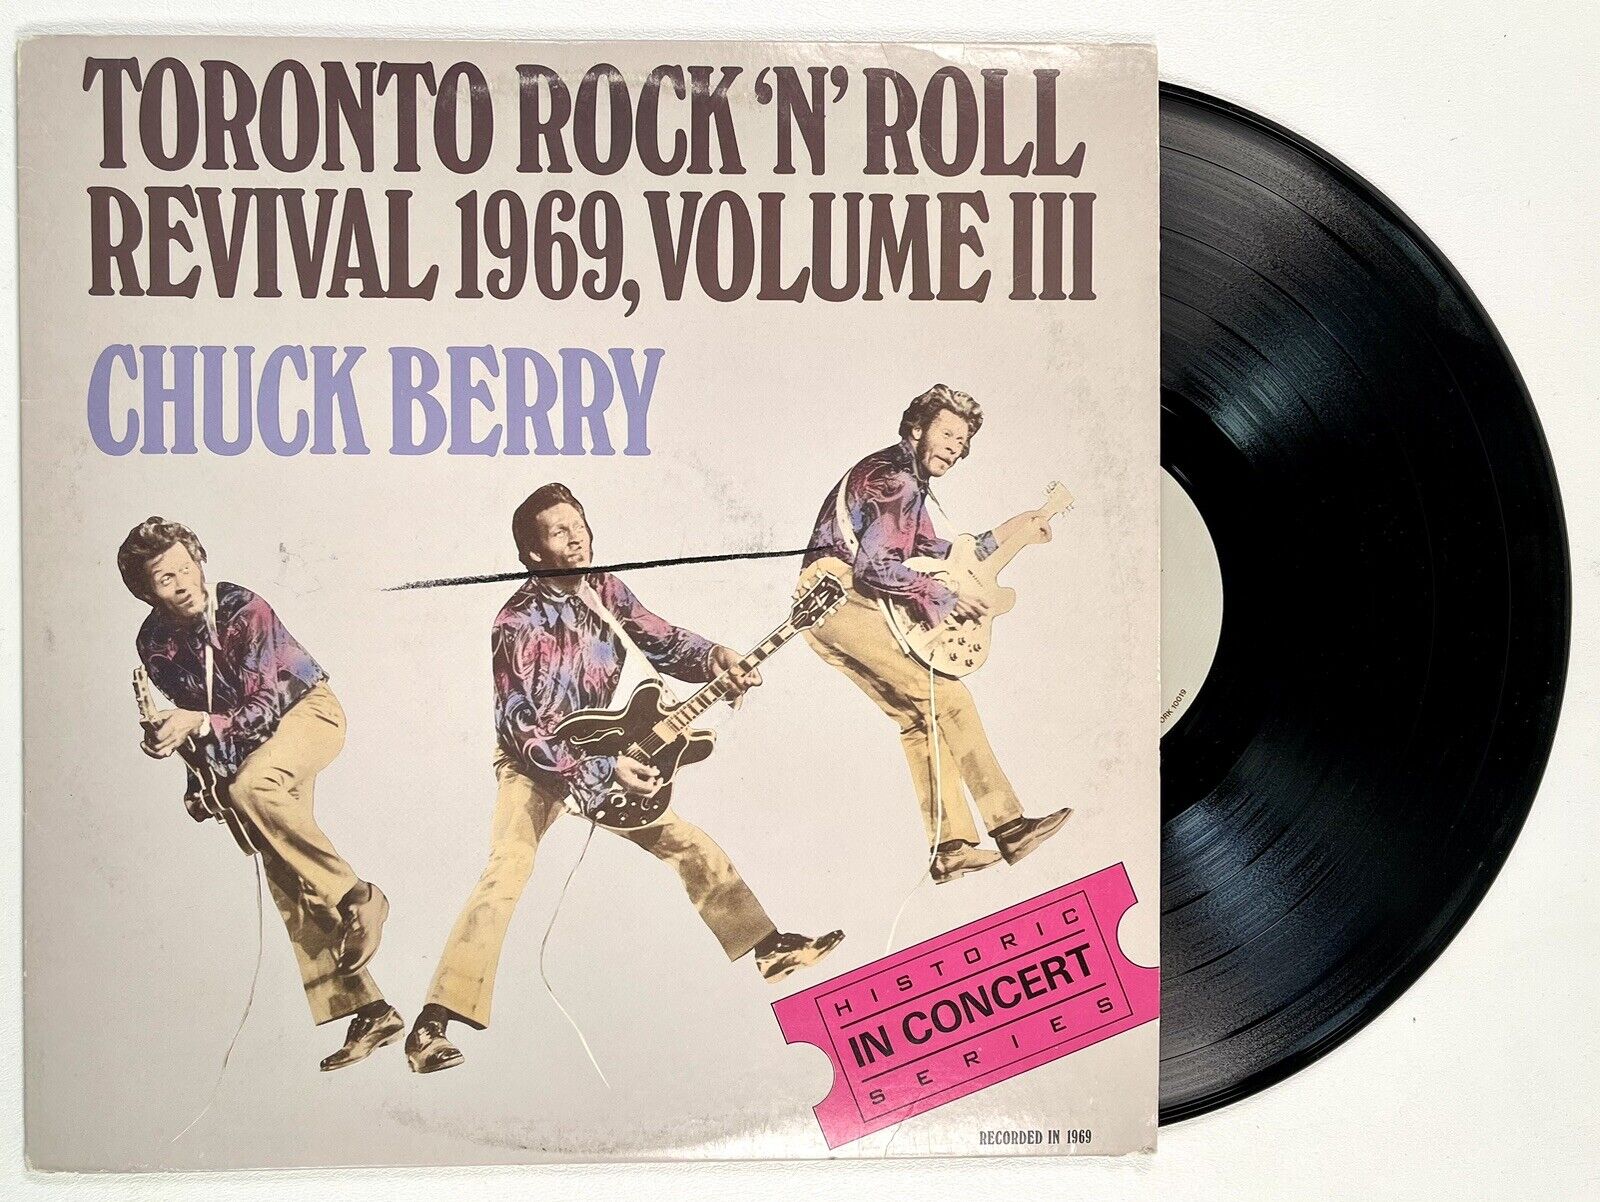 Chuck Berry Vinyl 1969 Toronto Rock N Roll Revival Vol III LP 1982 Accord Record